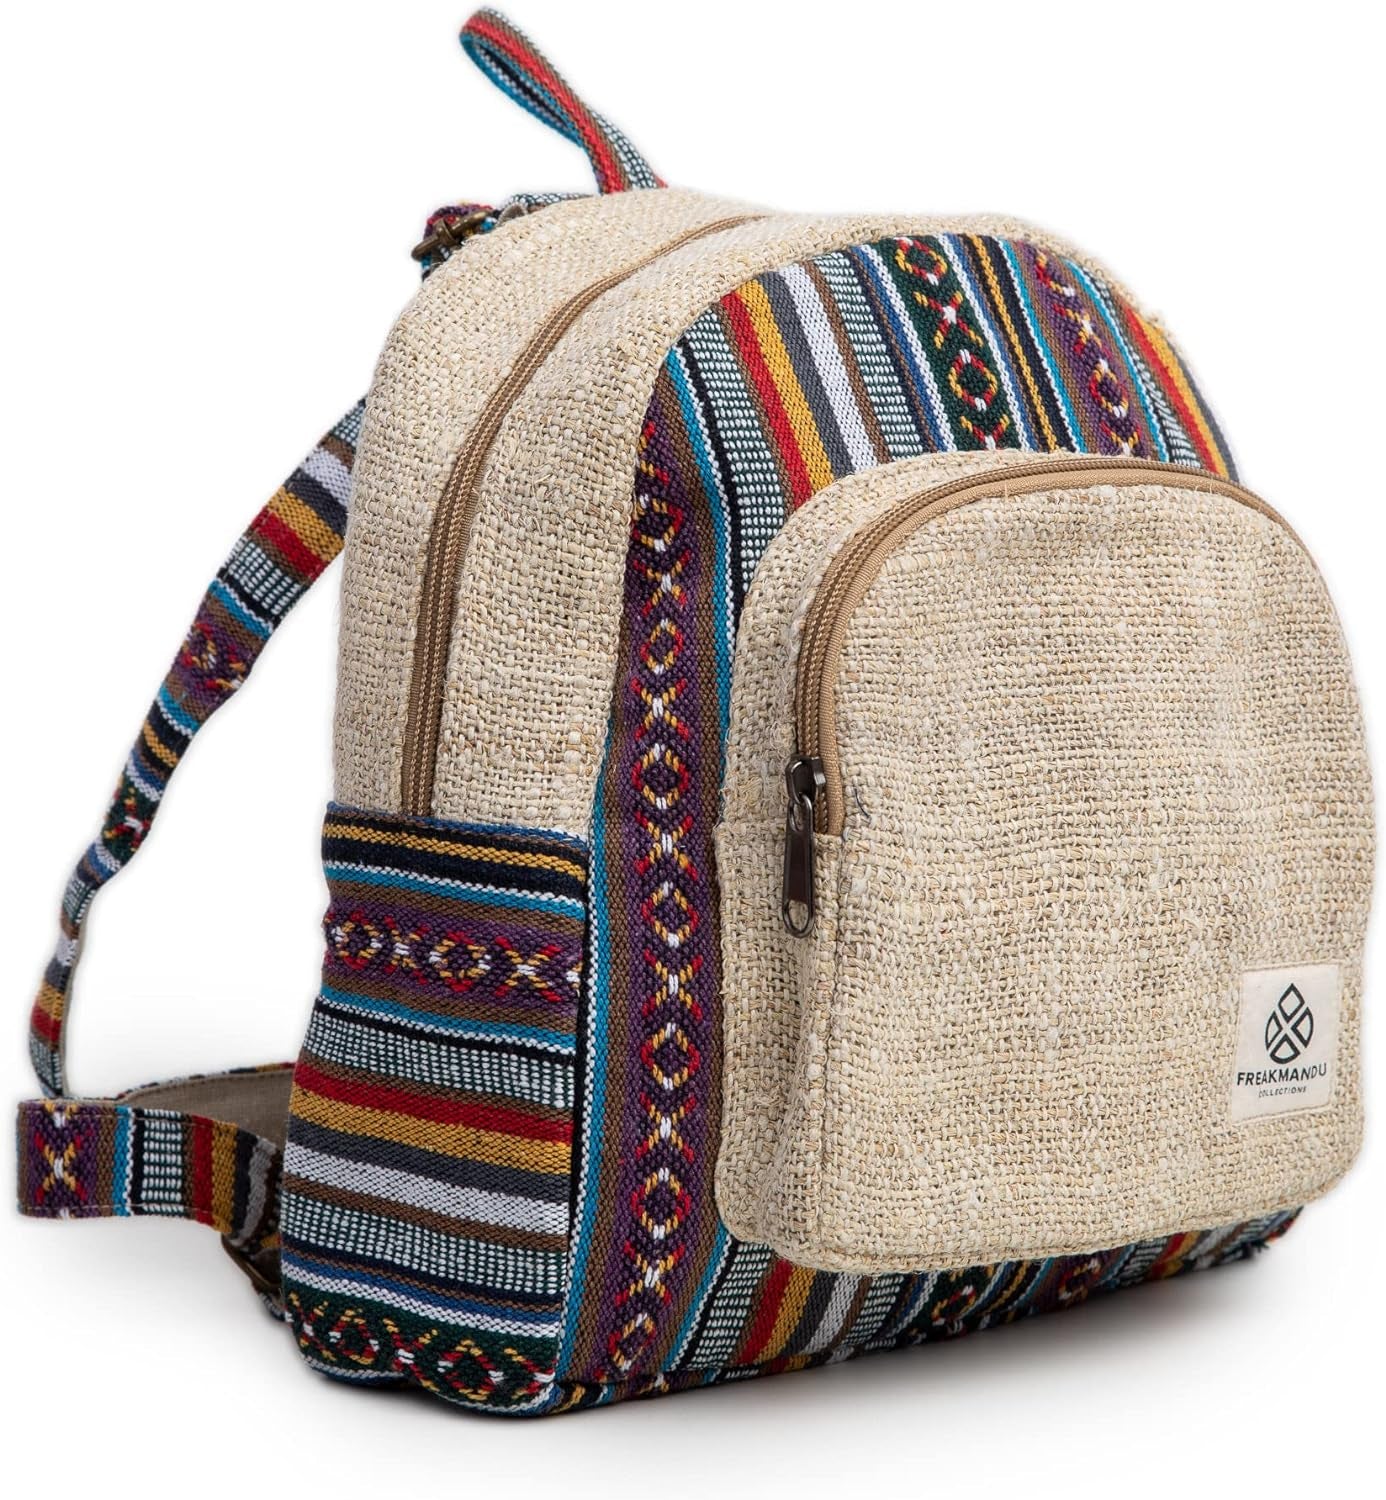 Mini Hemp Backpack Bag - Boho Eco Friendly Unisex Rustic Durable Adjustable Straps Bag by Freakmandu - Sandy White